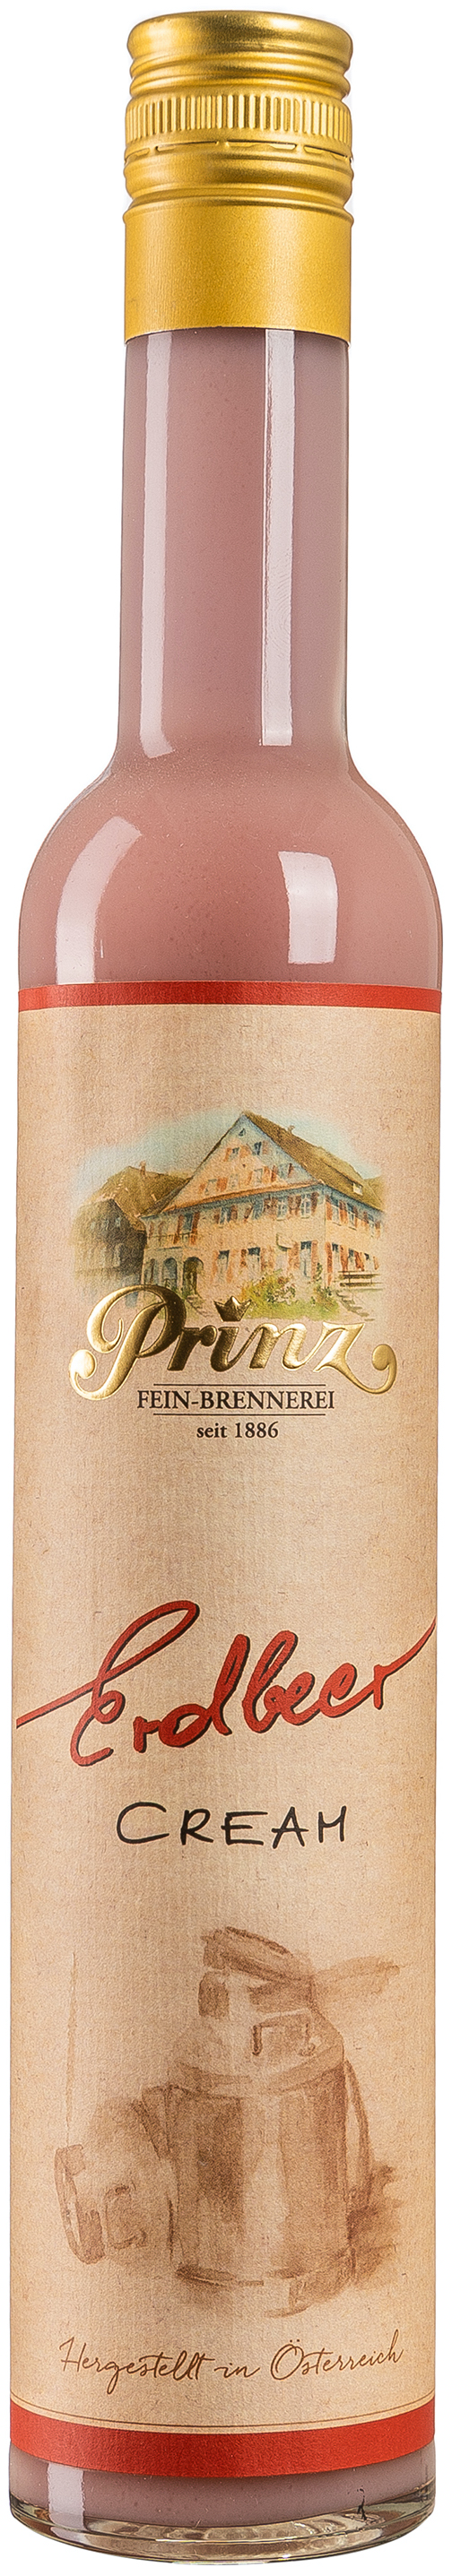 Prinz Erdbeer Cream 15% vol. 0,5L